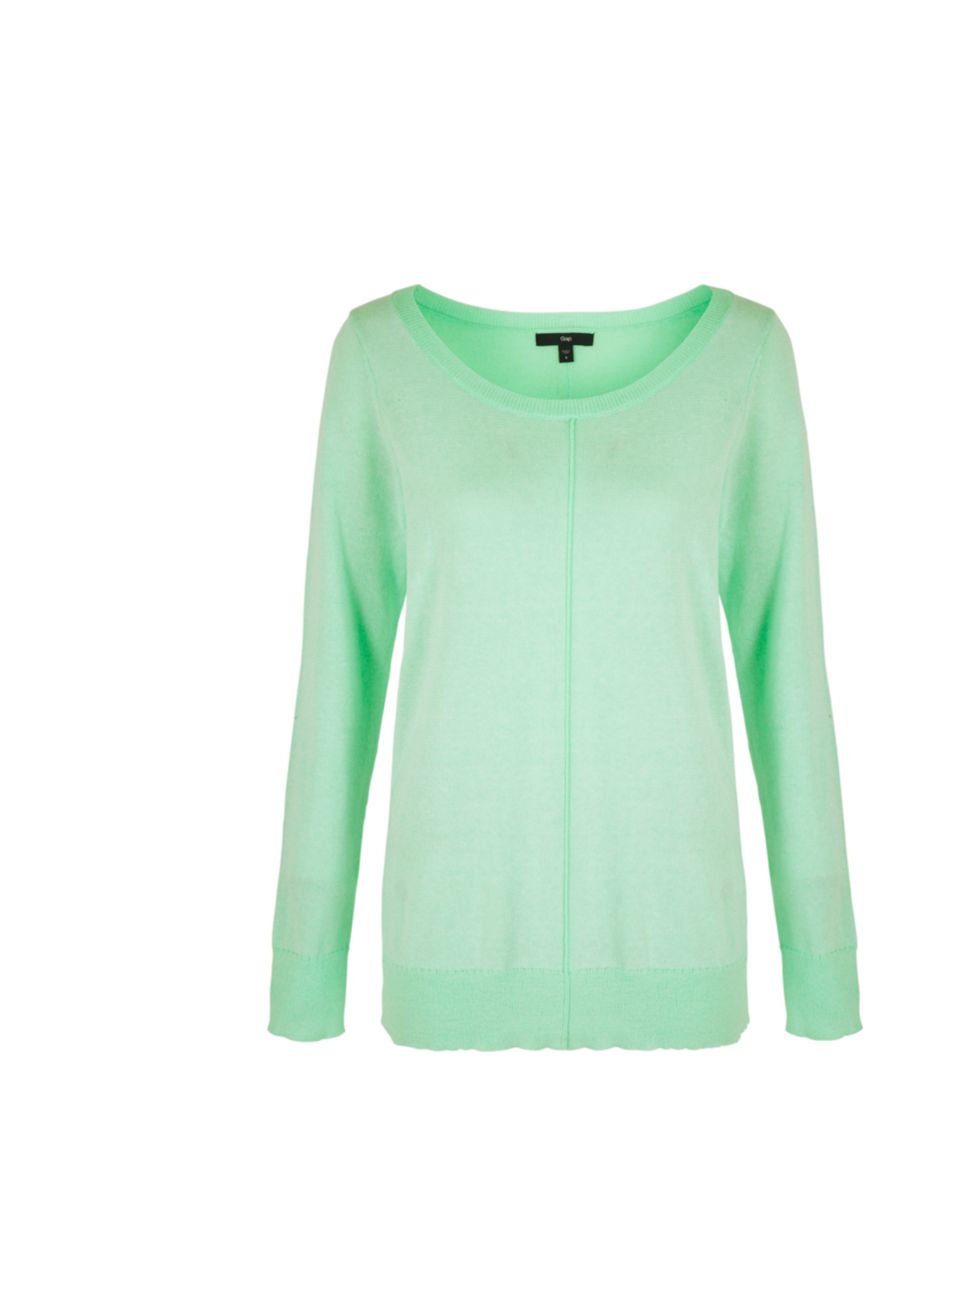 <p><a href="http://www.gap.eu/browse/division.do?cid=56725">GAP</a> neon green sweater, £29.95</p>